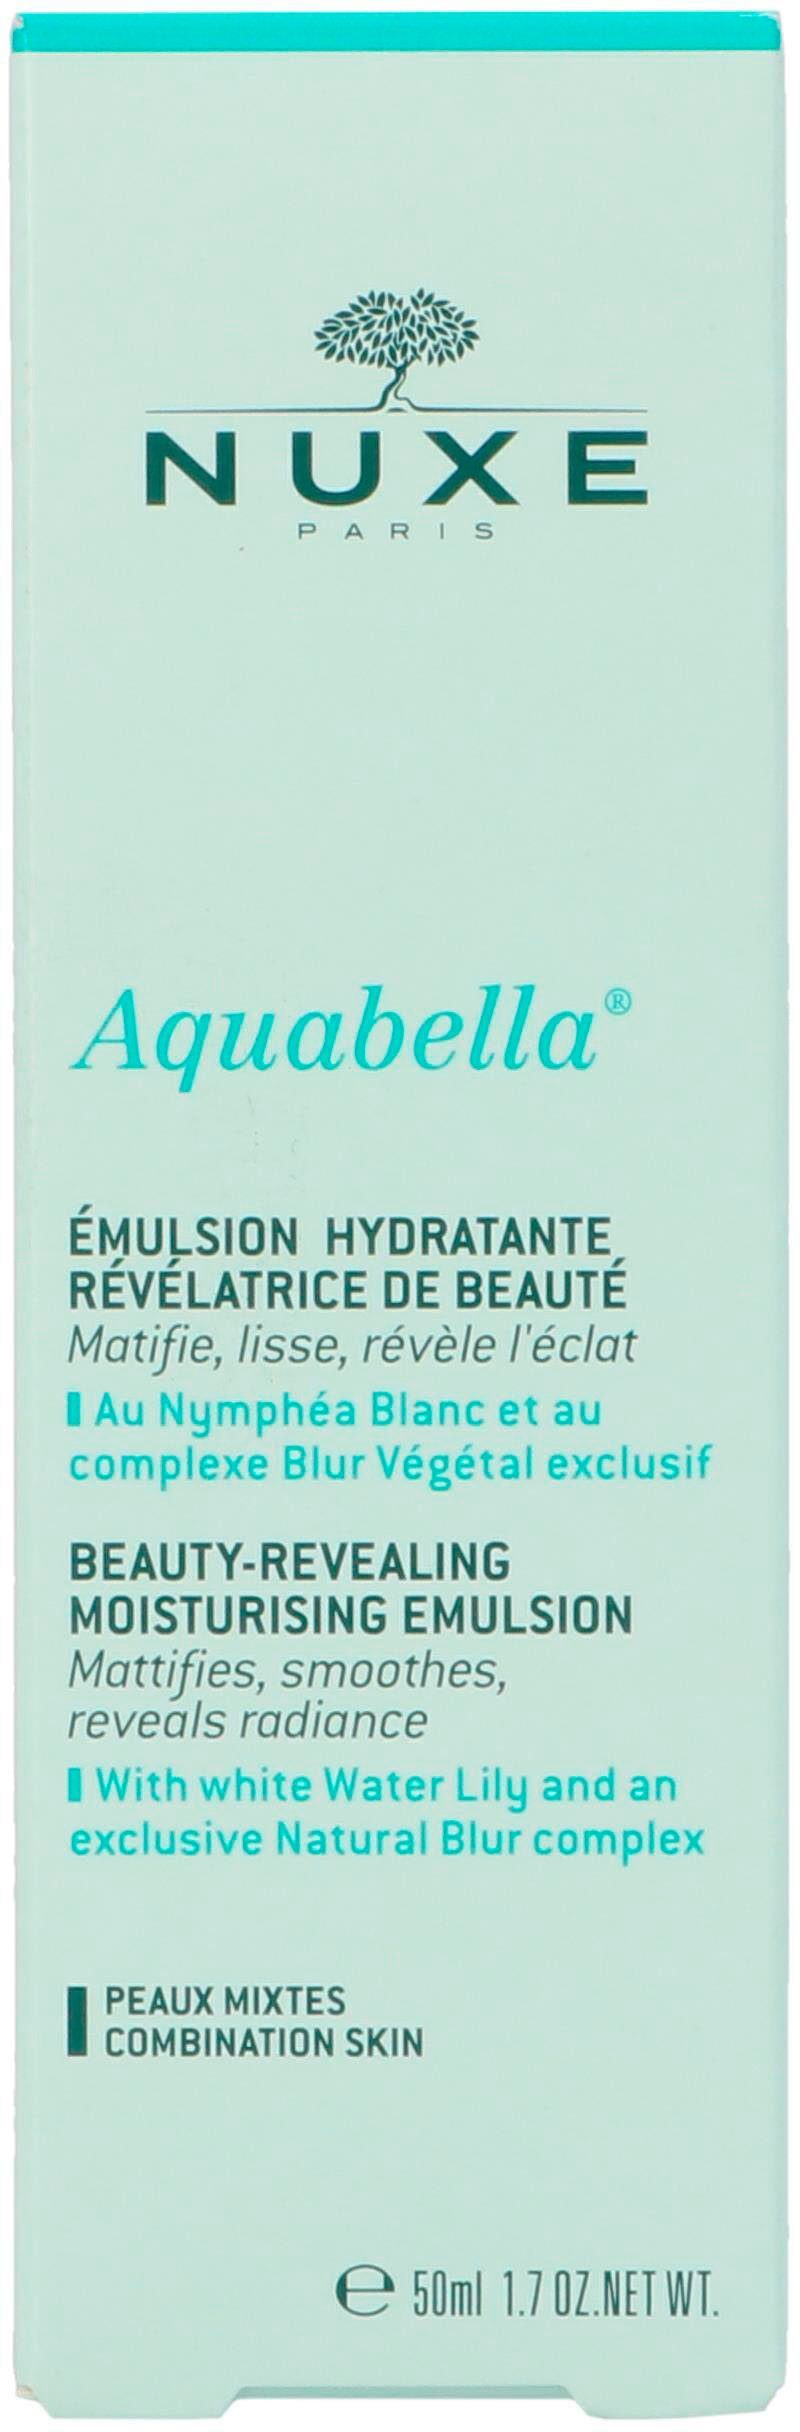 Nuxe Gesichtsserum Aquabella Beauty Moisturizing Emulsion Revealing